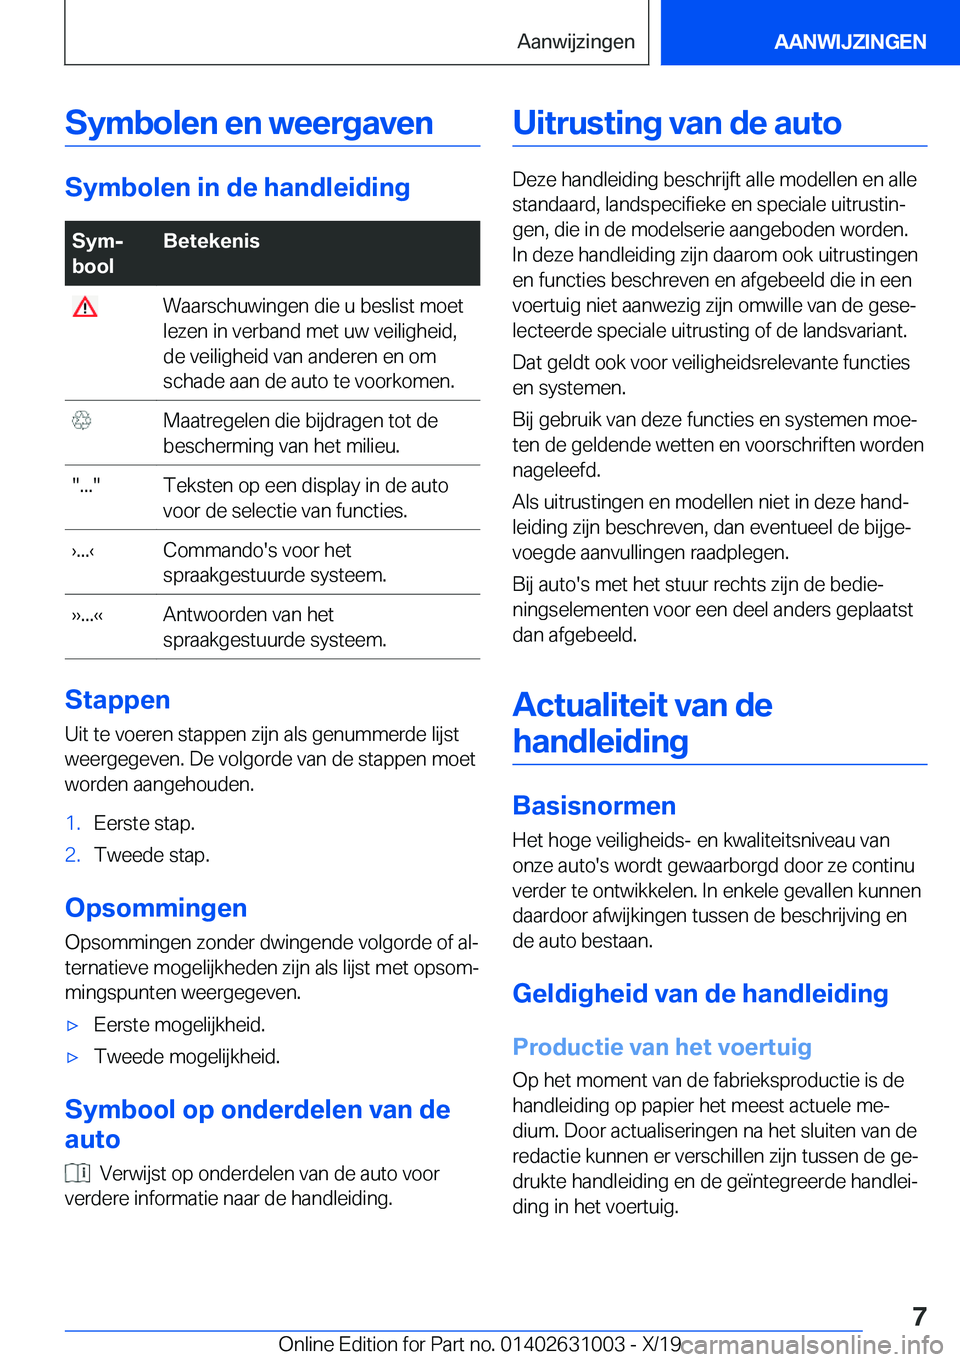 BMW 2 SERIES GRAN COUPE 2020  Instructieboekjes (in Dutch) �S�y�m�b�o�l�e�n��e�n��w�e�e�r�g�a�v�e�n
�S�y�m�b�o�l�e�n��i�n��d�e��h�a�n�d�l�e�i�d�i�n�g
�S�y�mj
�b�o�o�l�B�e�t�e�k�e�n�i�s��W�a�a�r�s�c�h�u�w�i�n�g�e�n��d�i�e��u��b�e�s�l�i�s�t��m�o�e�t
